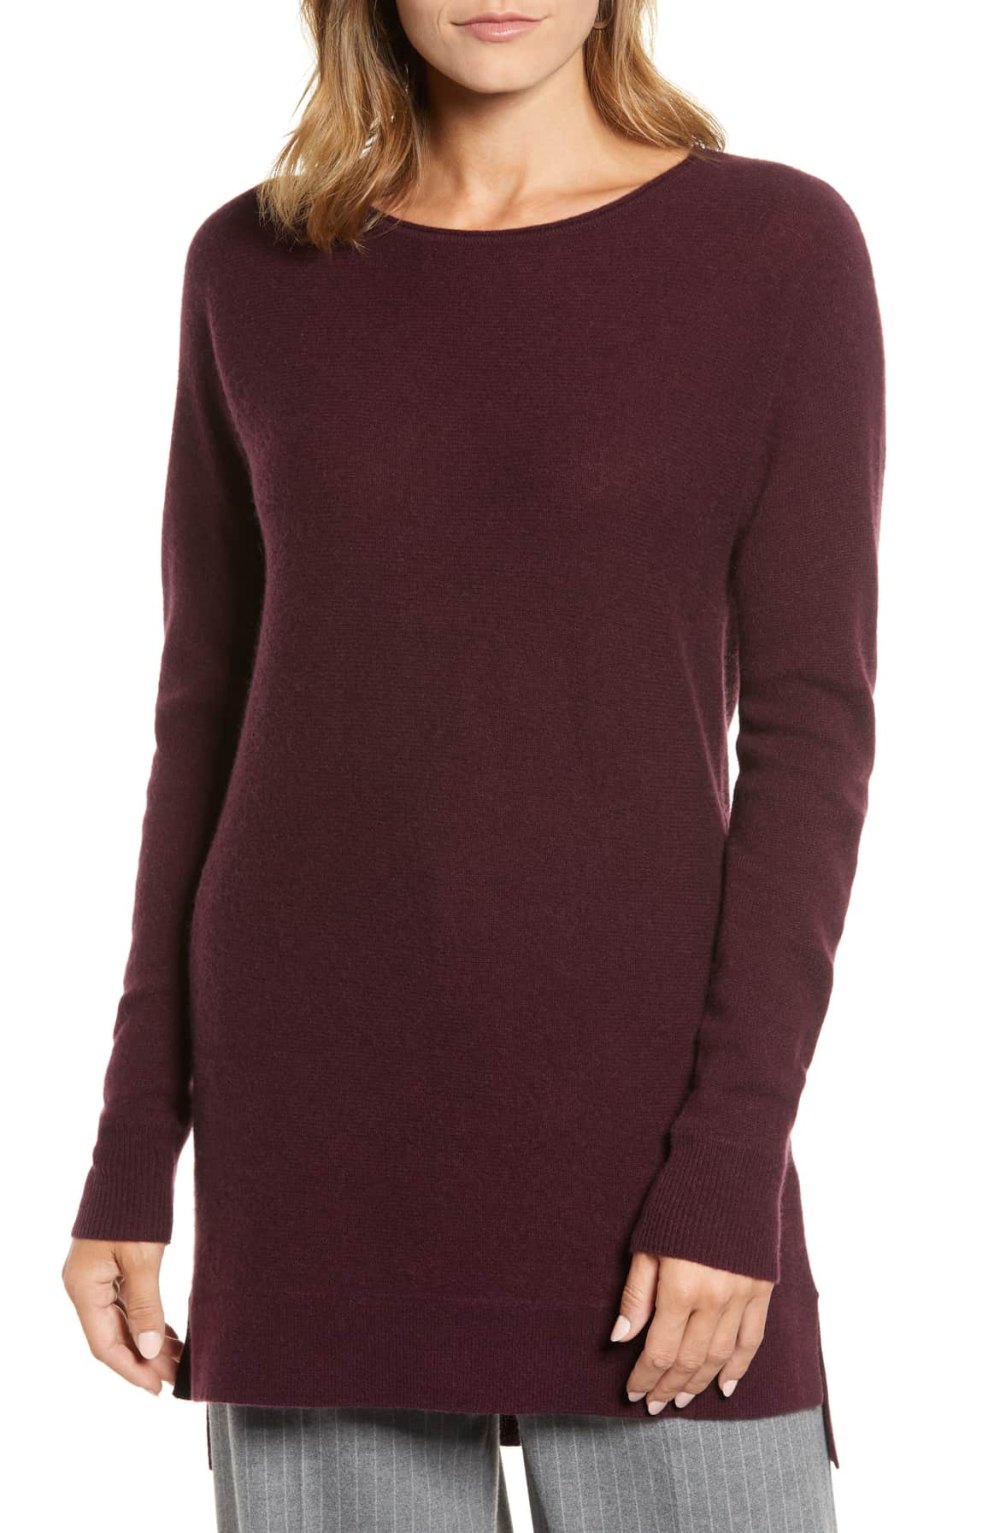 cashmere wool sweater nordstrom wine oxblood burgundy